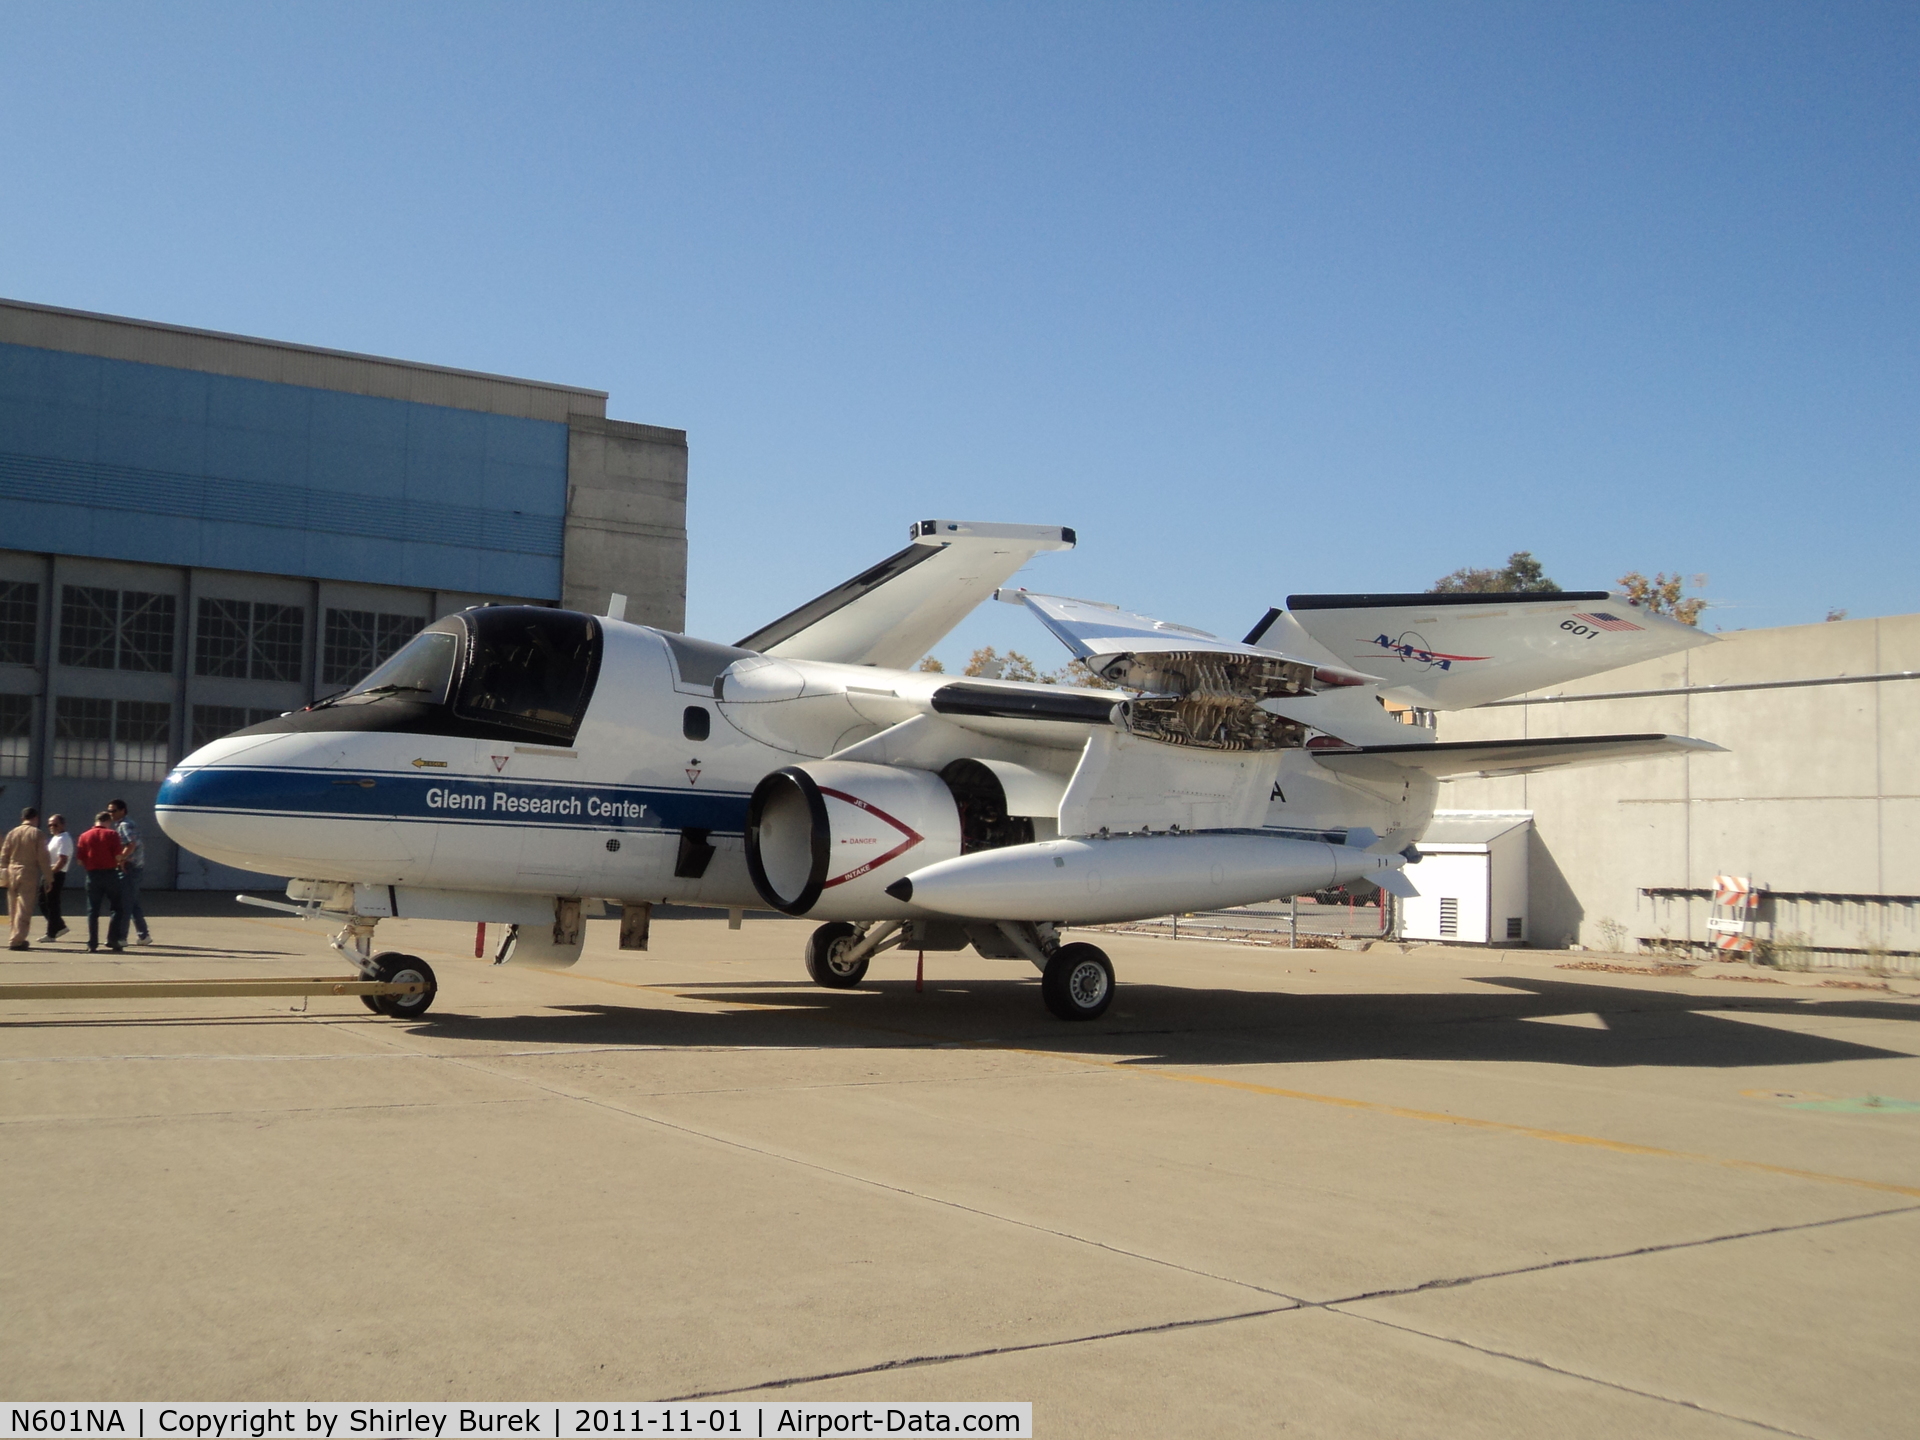 N601NA, Lockheed S-3A Viking C/N 394A-1187, November 1st
arrived at Moffet Field
NASA-Ames Research Ctr